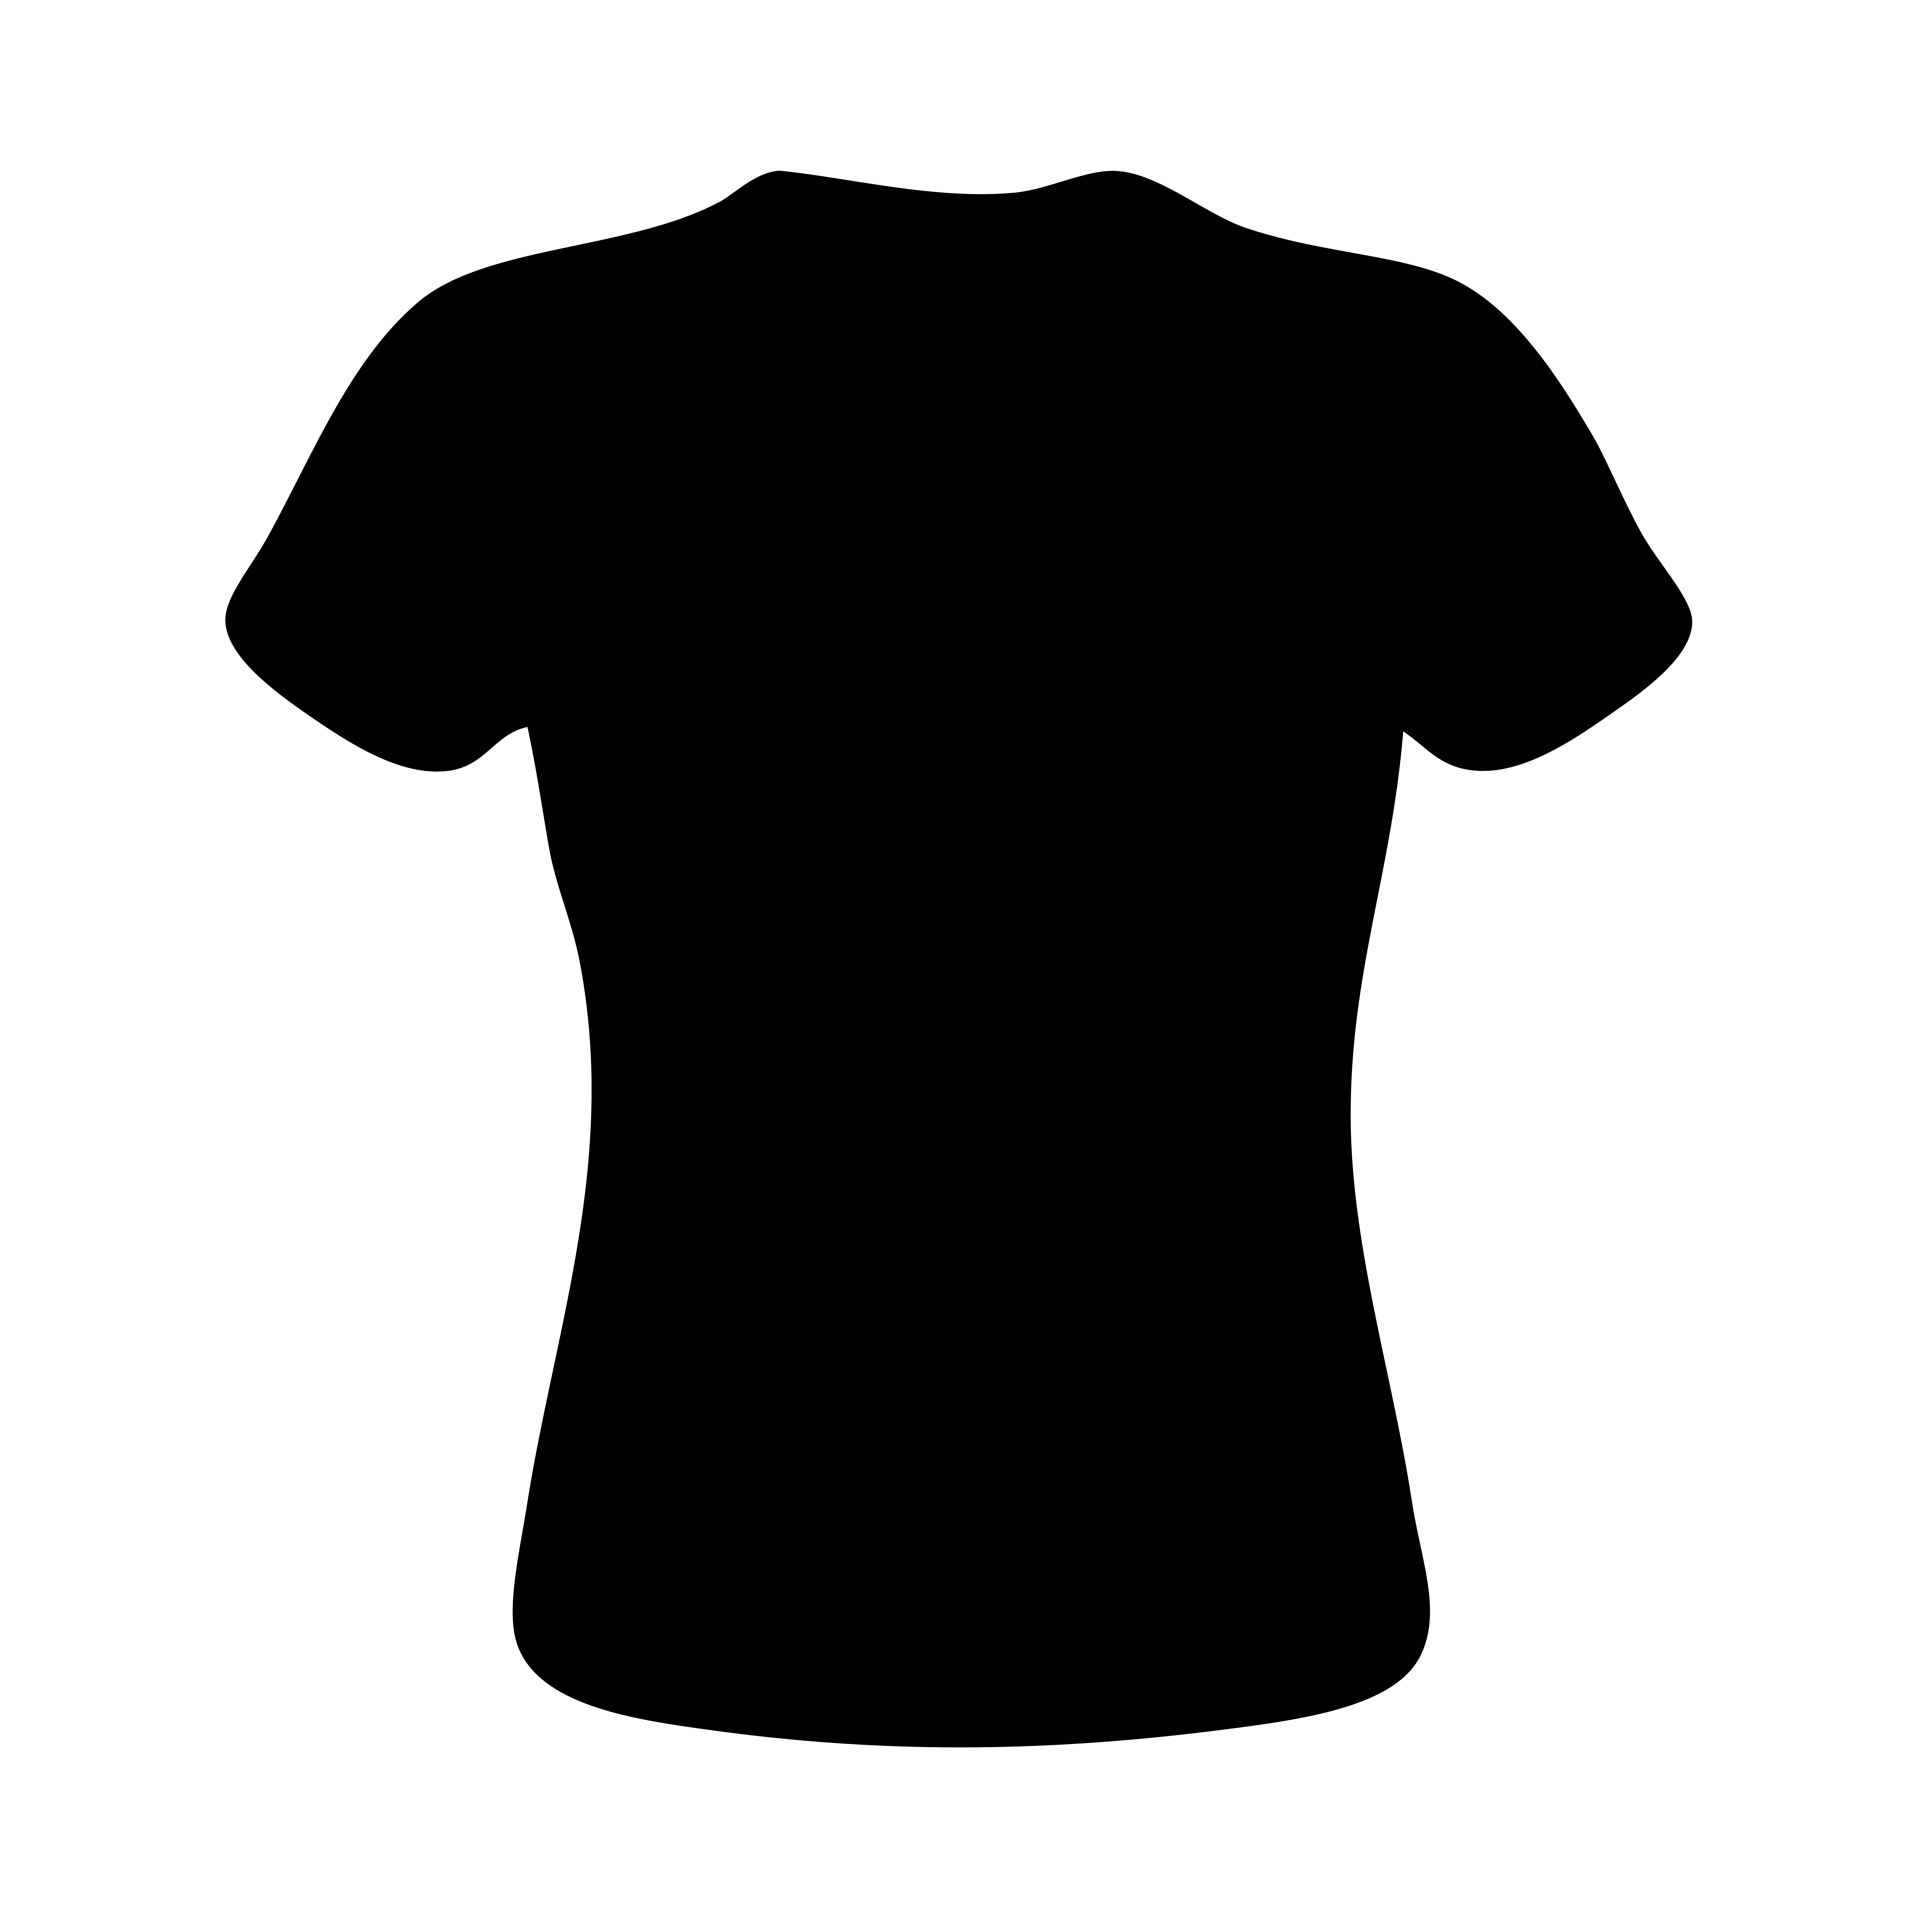 T Shirt Clip Art at  - vector clip art online, royalty free &  public domain